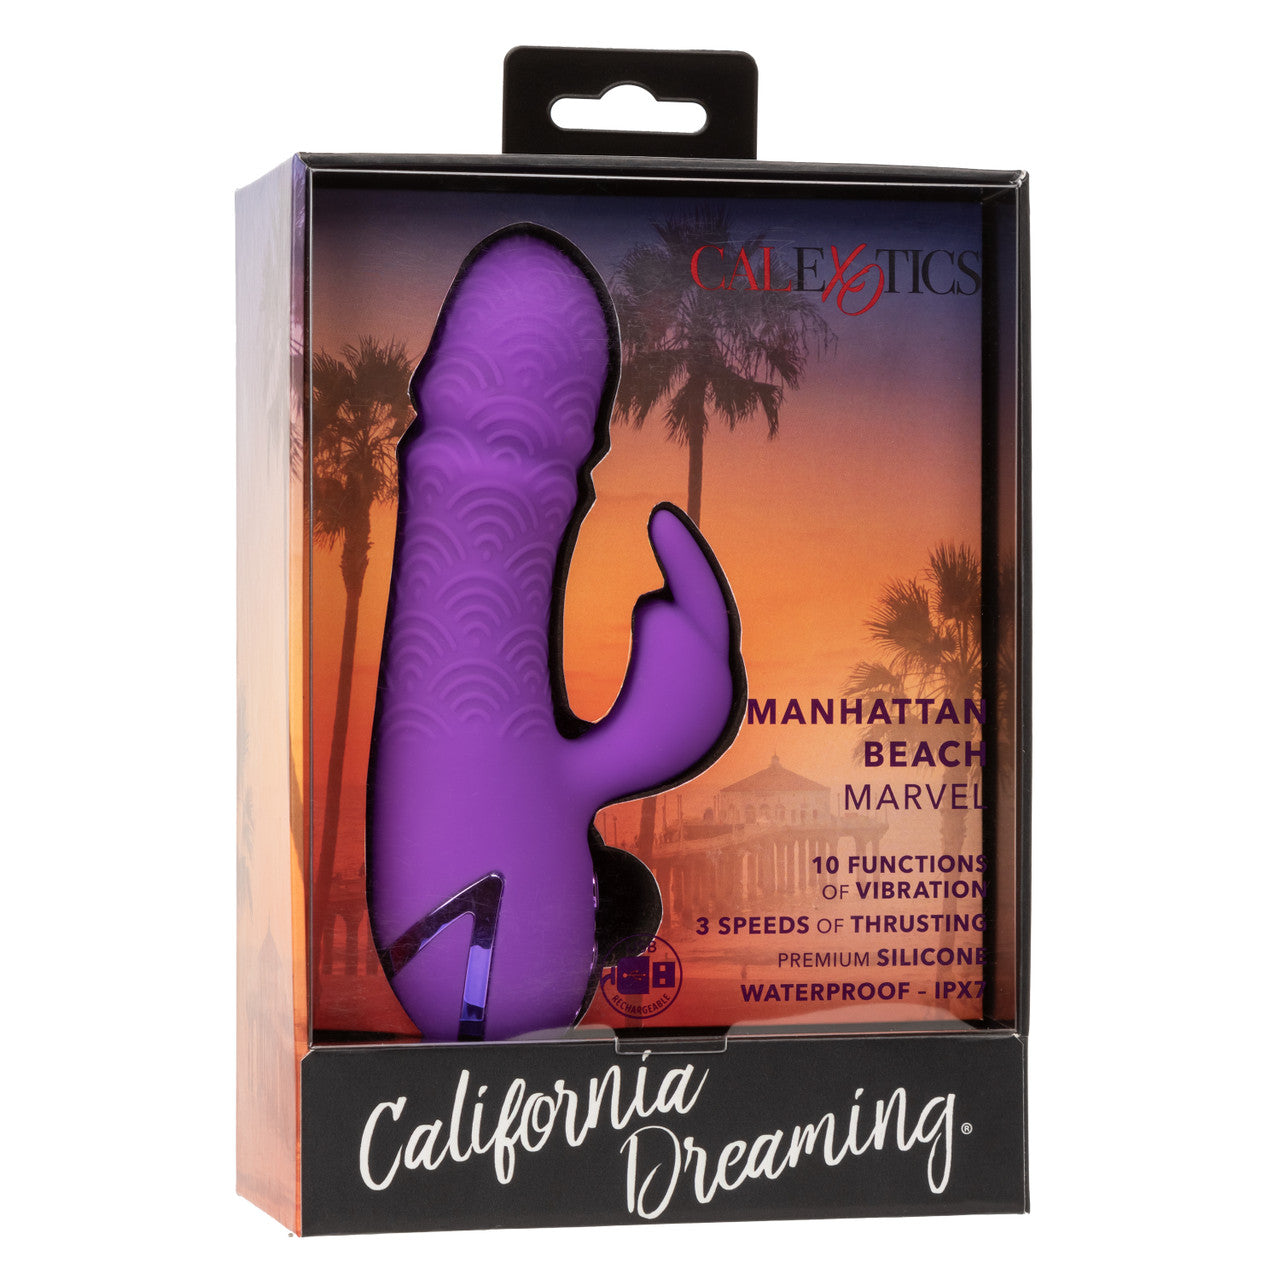 Calexotics California Dreaming® Manhattan Beach Marvel